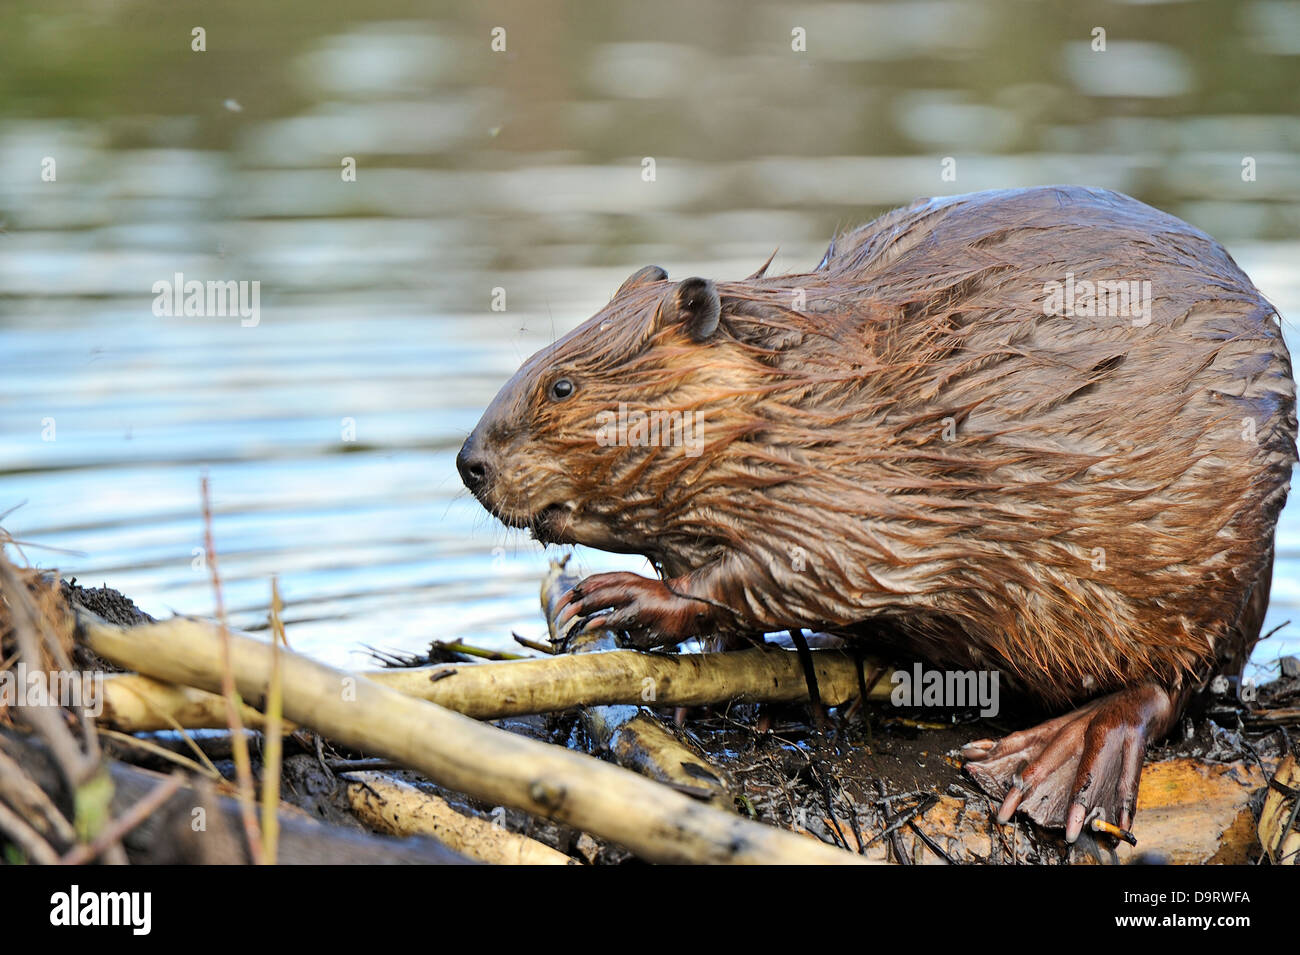 Mature Beaver Pics